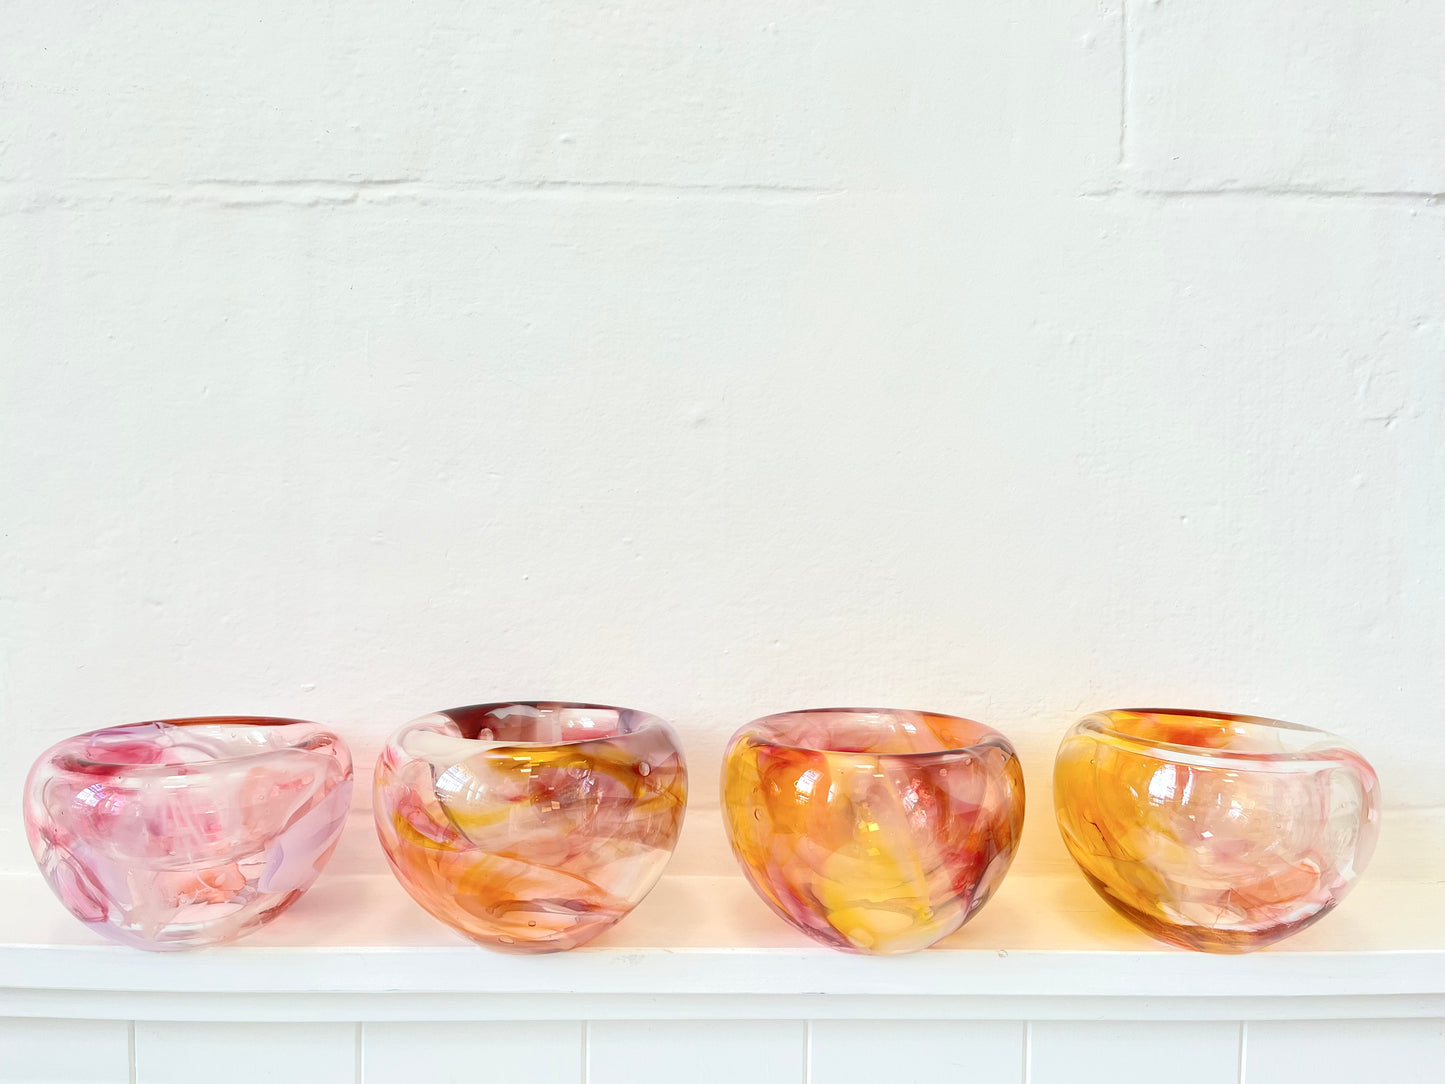 Handblown Glass "Fulvio" Bowl - Pink, Yellow, Plum Spot Marble #1